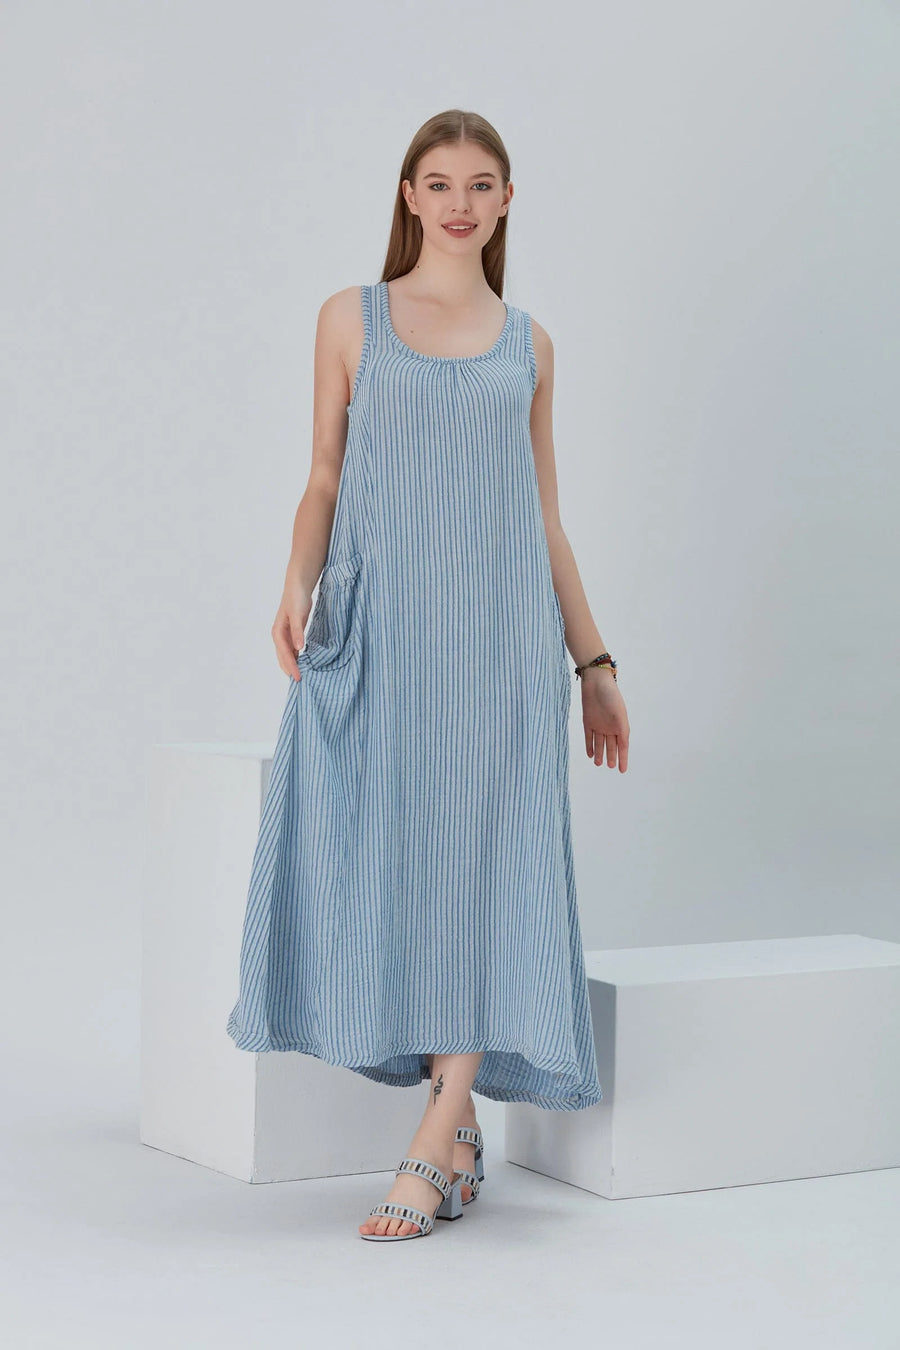 Begonville Maxi Dress Anita Comfort Fit Cotton Maxi Dress - Blue